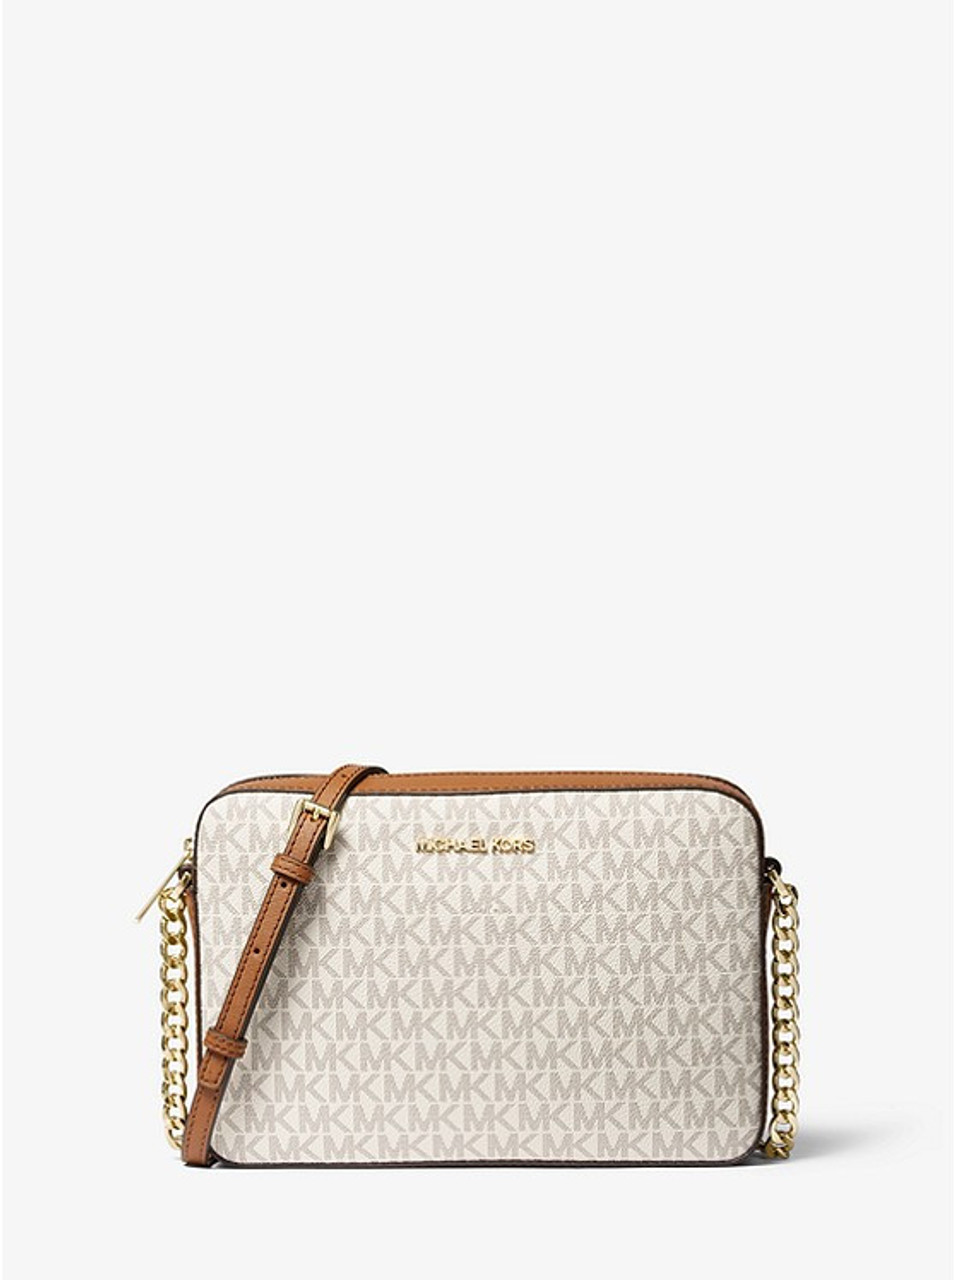 Michael Kors Hamilton Medium Vanilla MK Signature Pink Satchel Crossbody  Handbag : Clothing, Shoes & Jewelry - Amazon.com